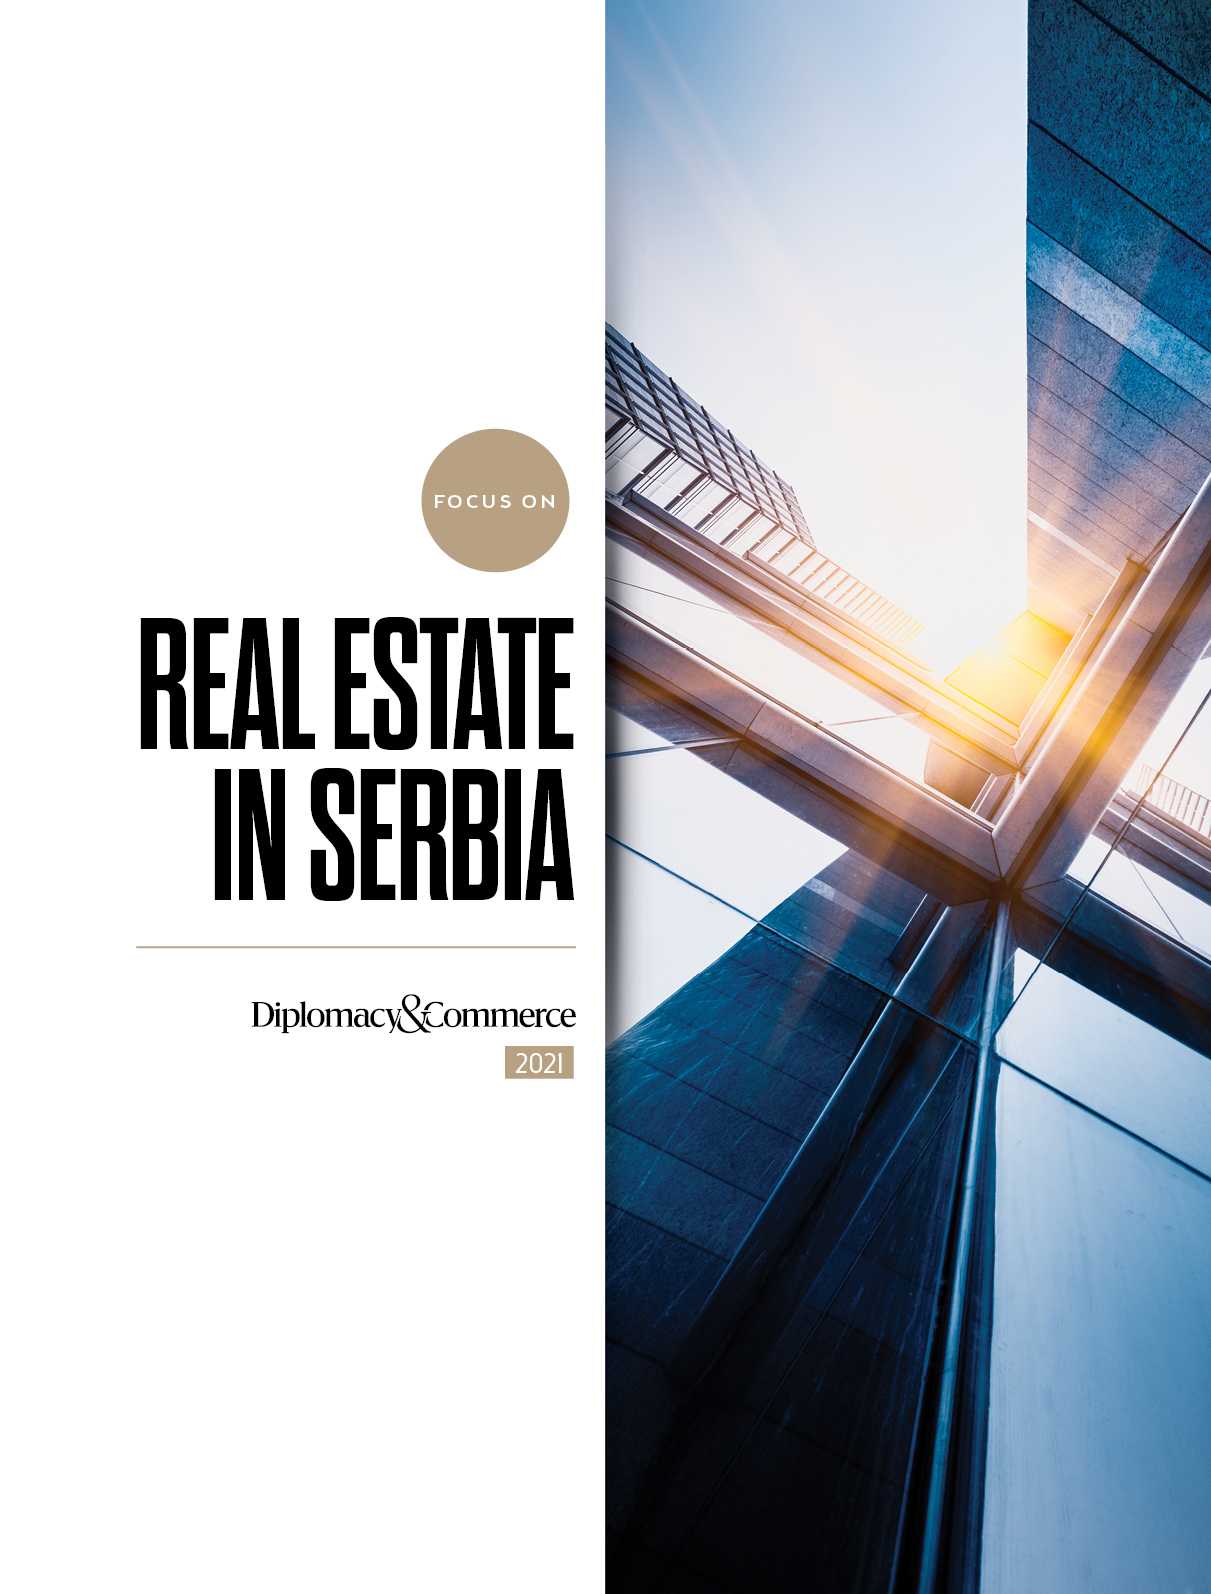 DandC Diplomacy&Commerce - Focus-On Real Estate In Serbia - 2021